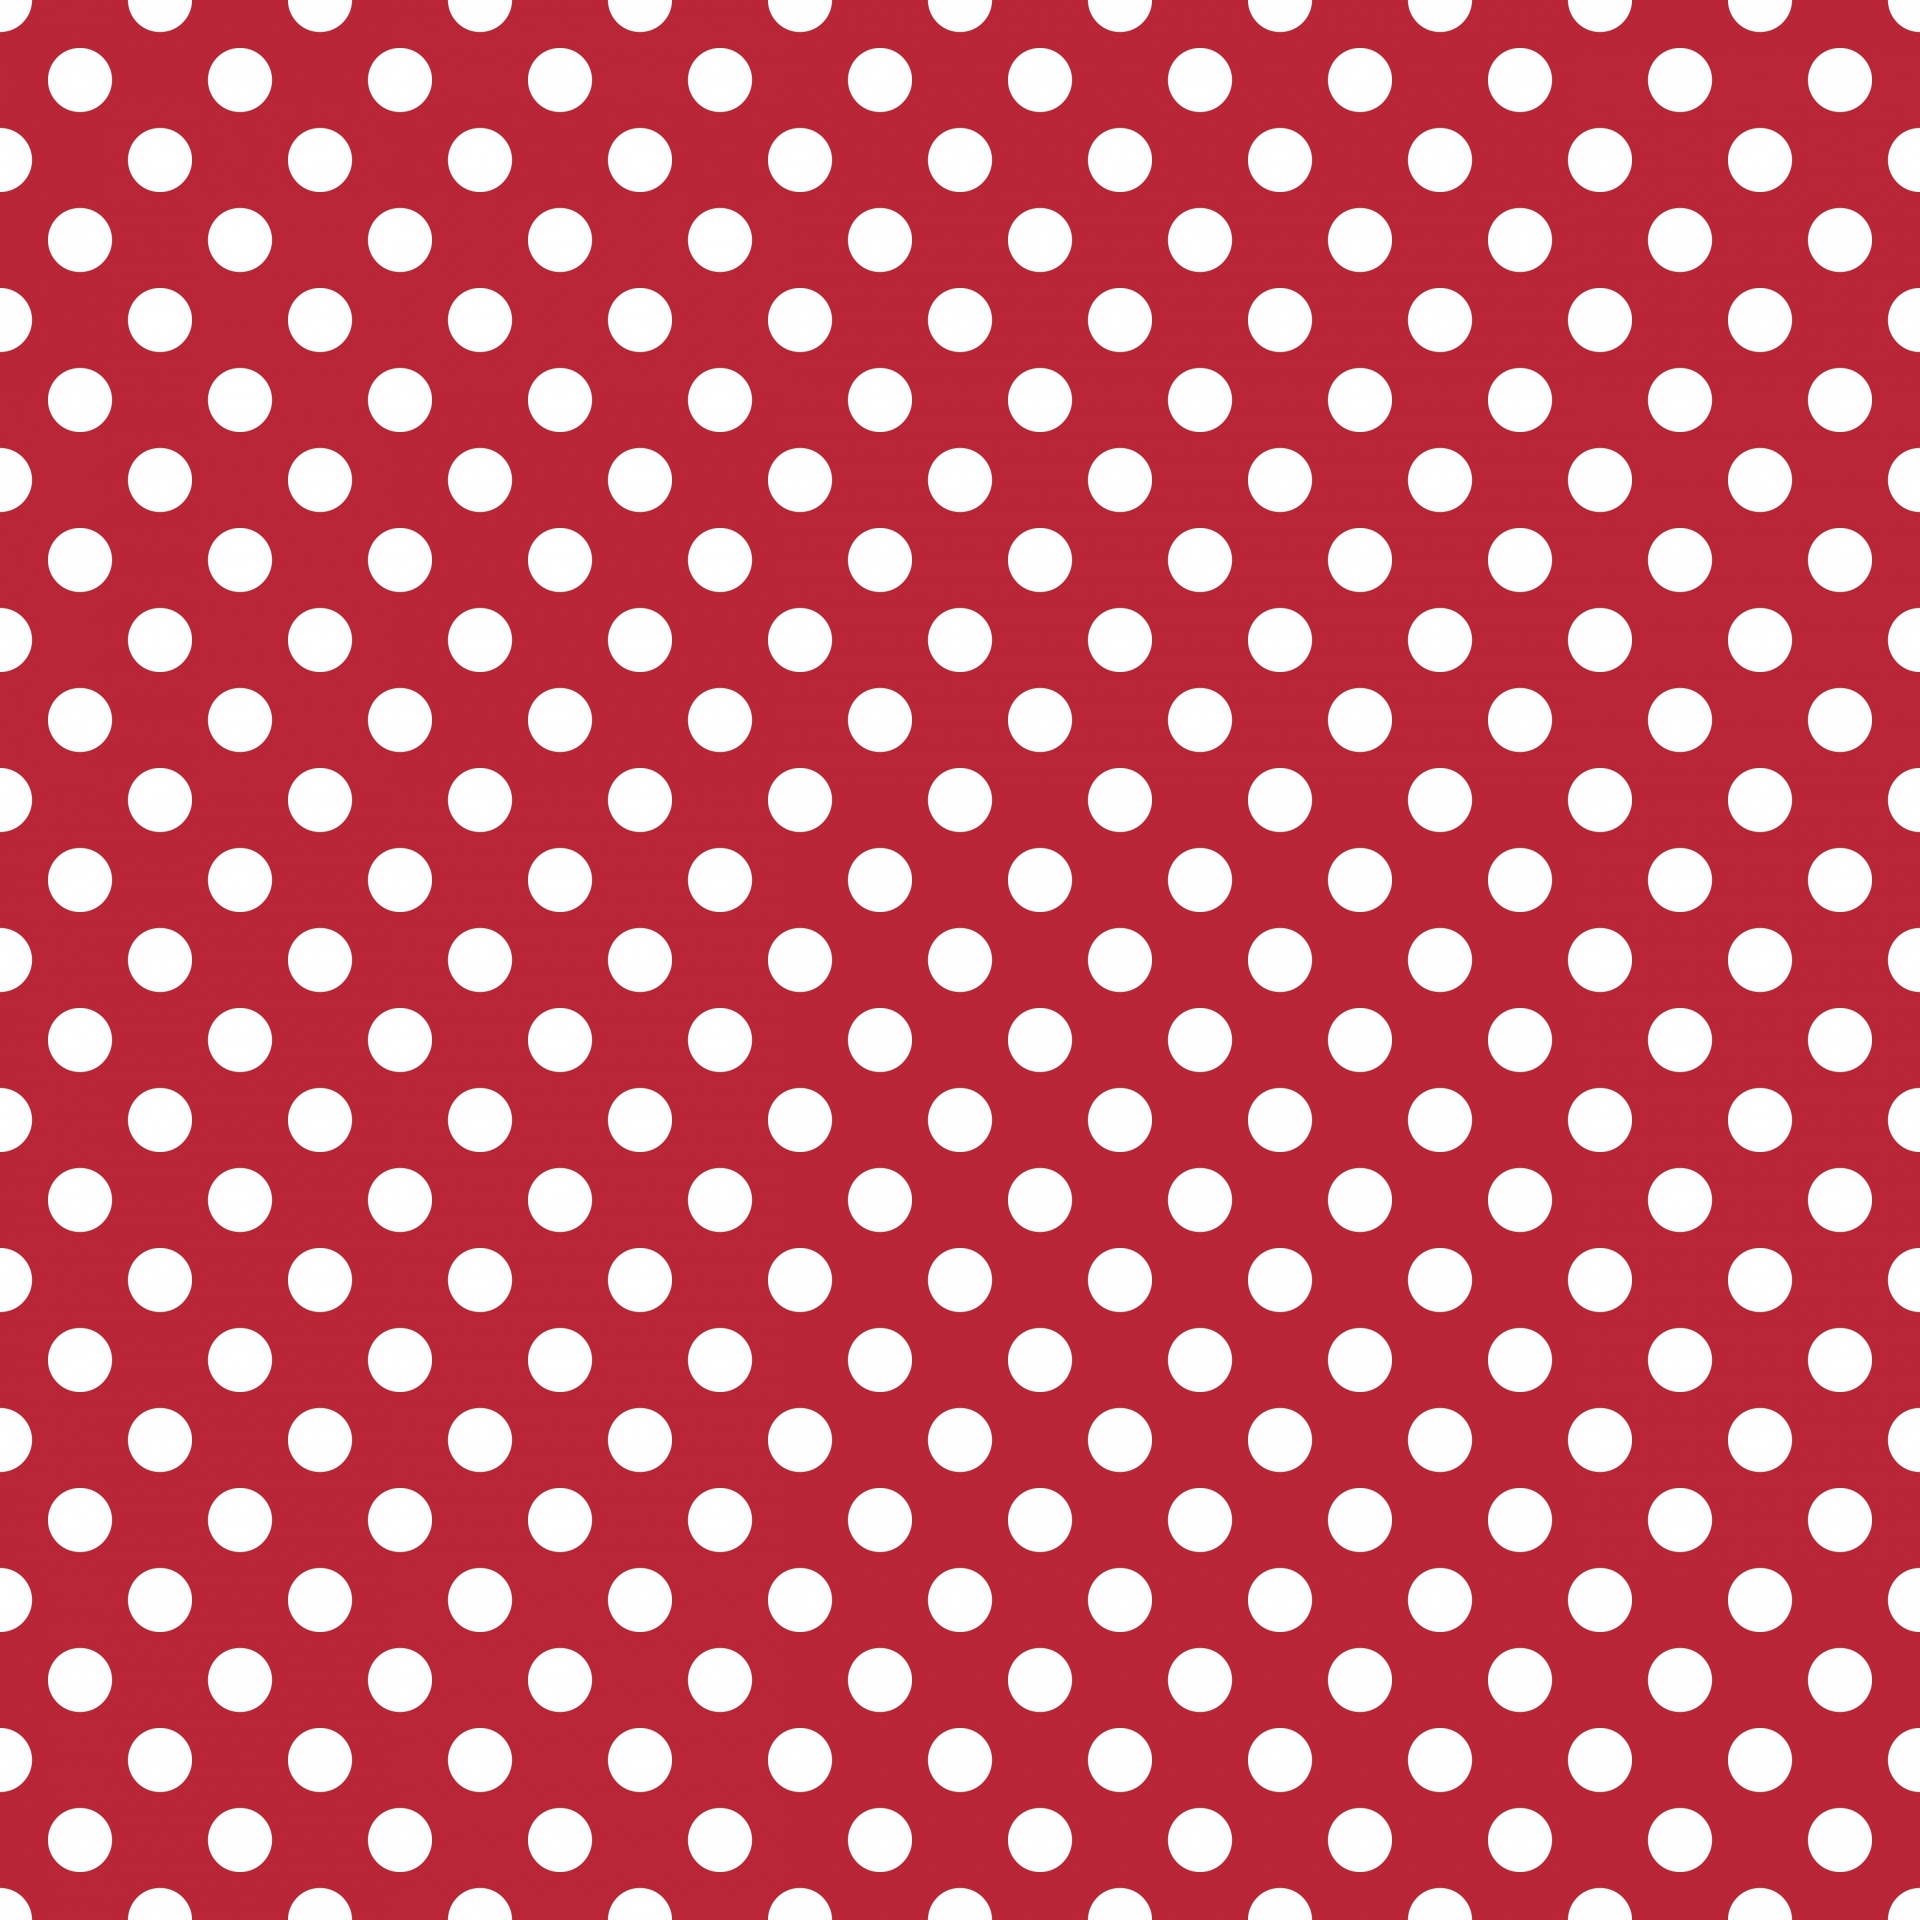 Polka Dots Red White